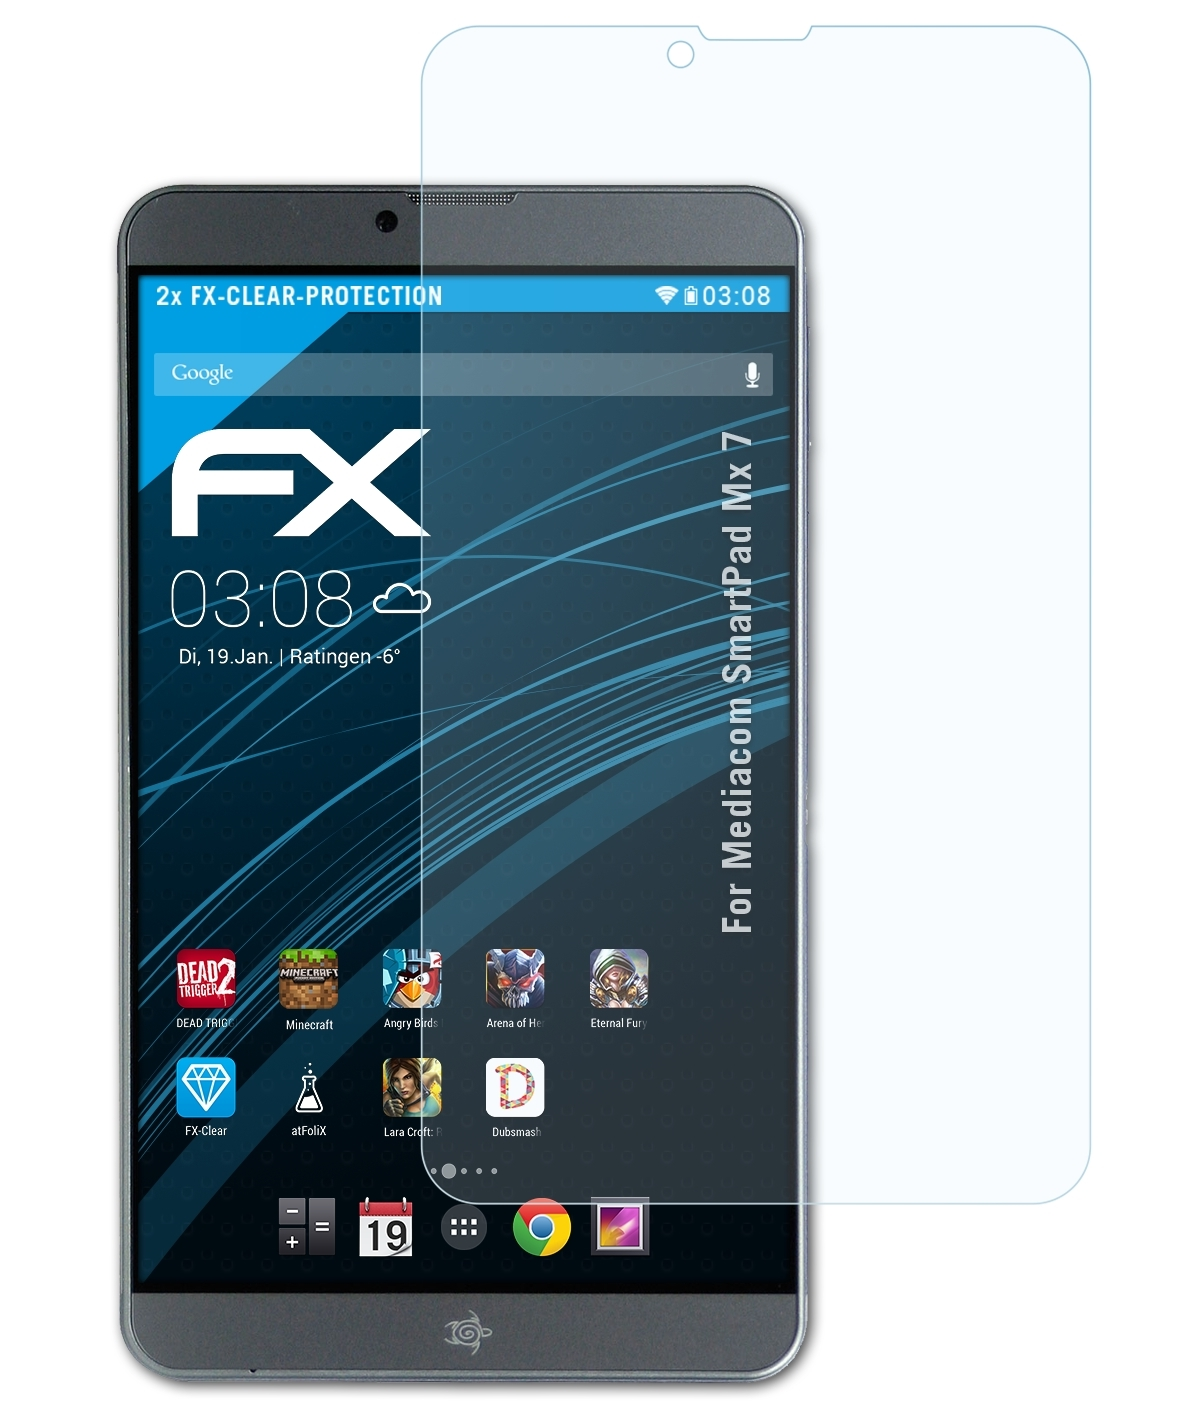 ATFOLIX 2x Displayschutz(für FX-Clear 7) Mx Mediacom SmartPad